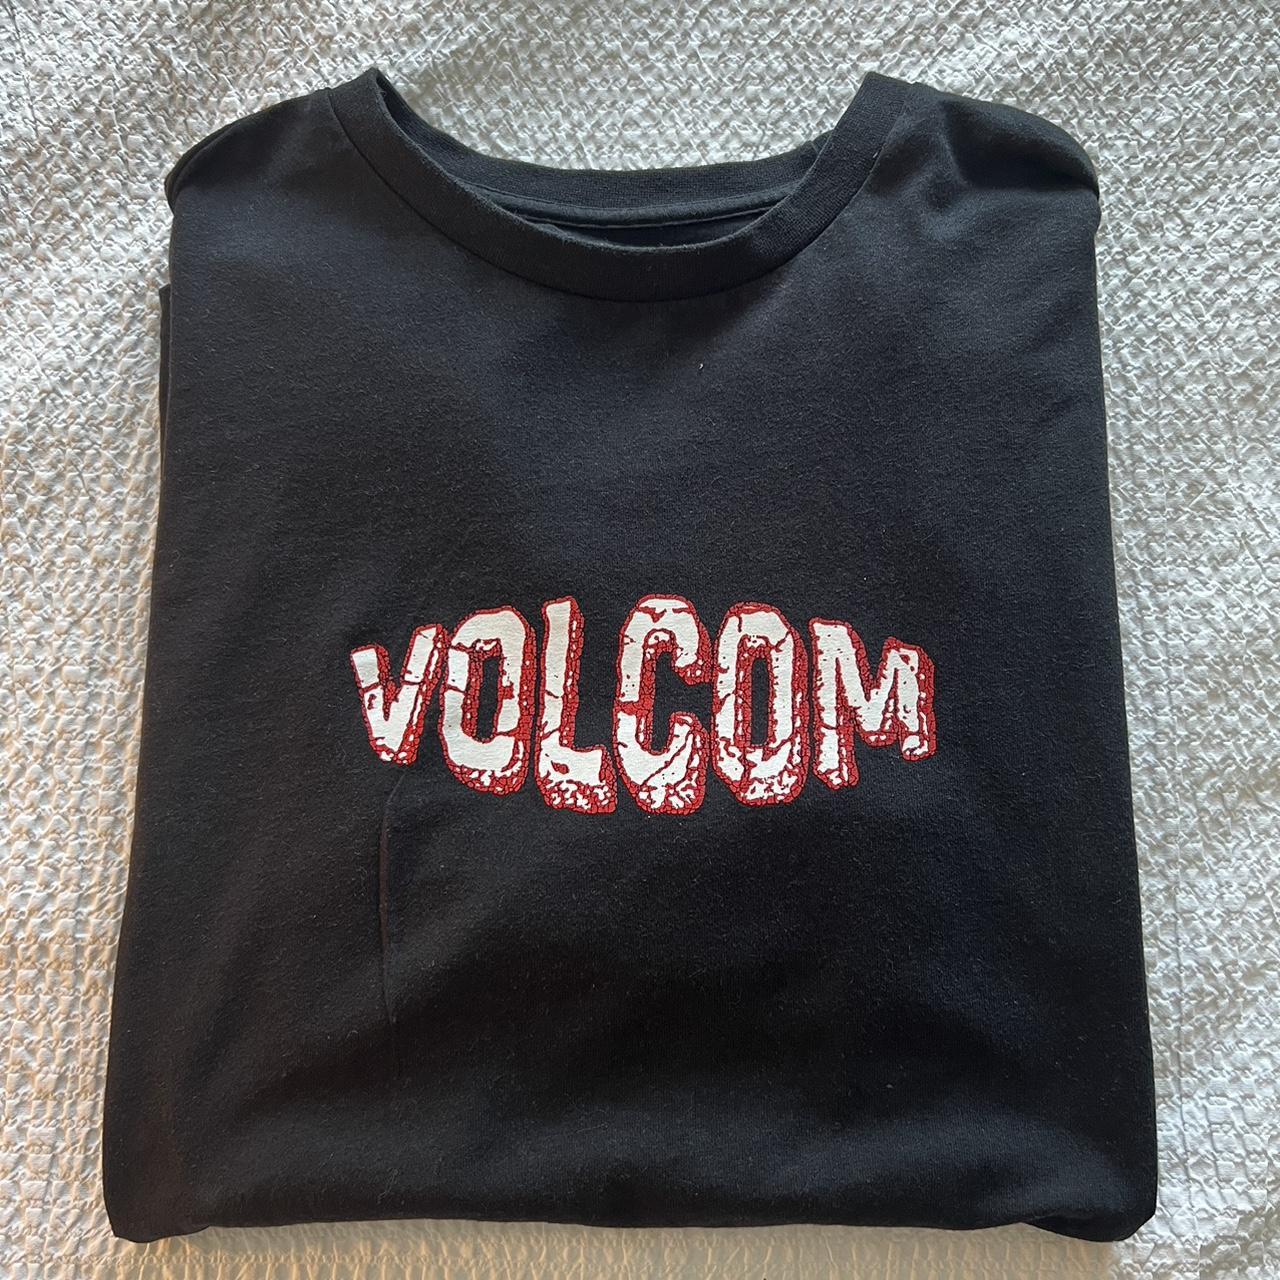 Volcom Men's Black and Red T-shirt | Depop